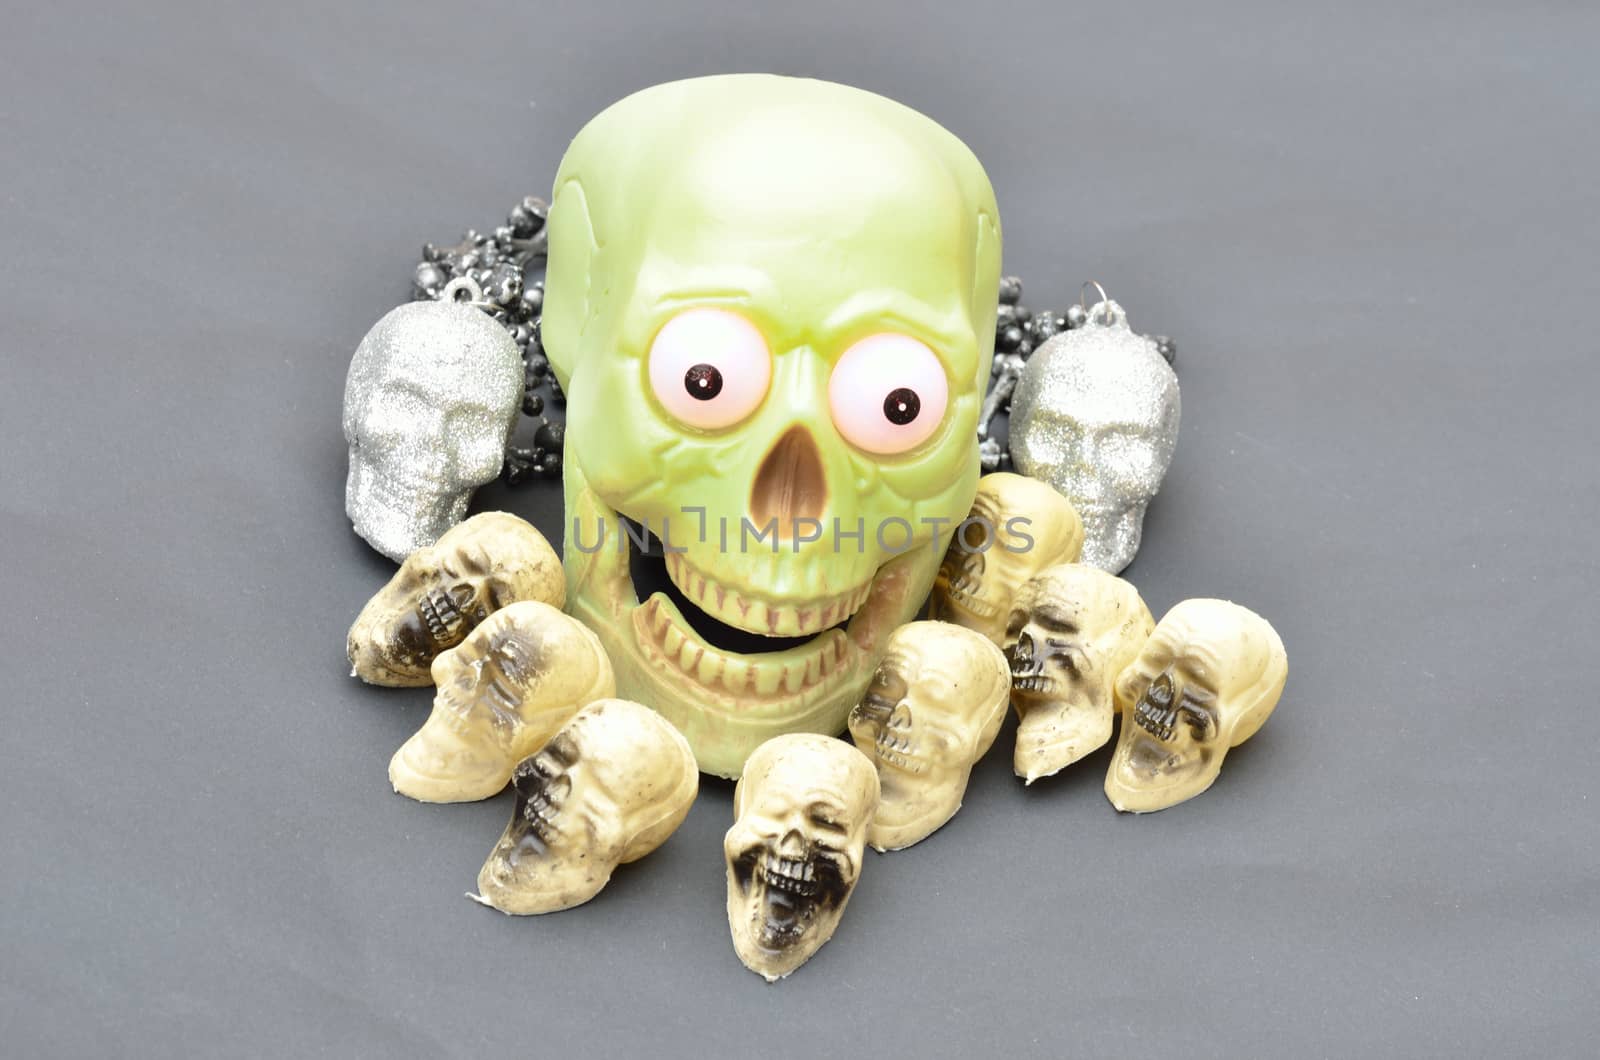 Big skulls and small skull by pauws99